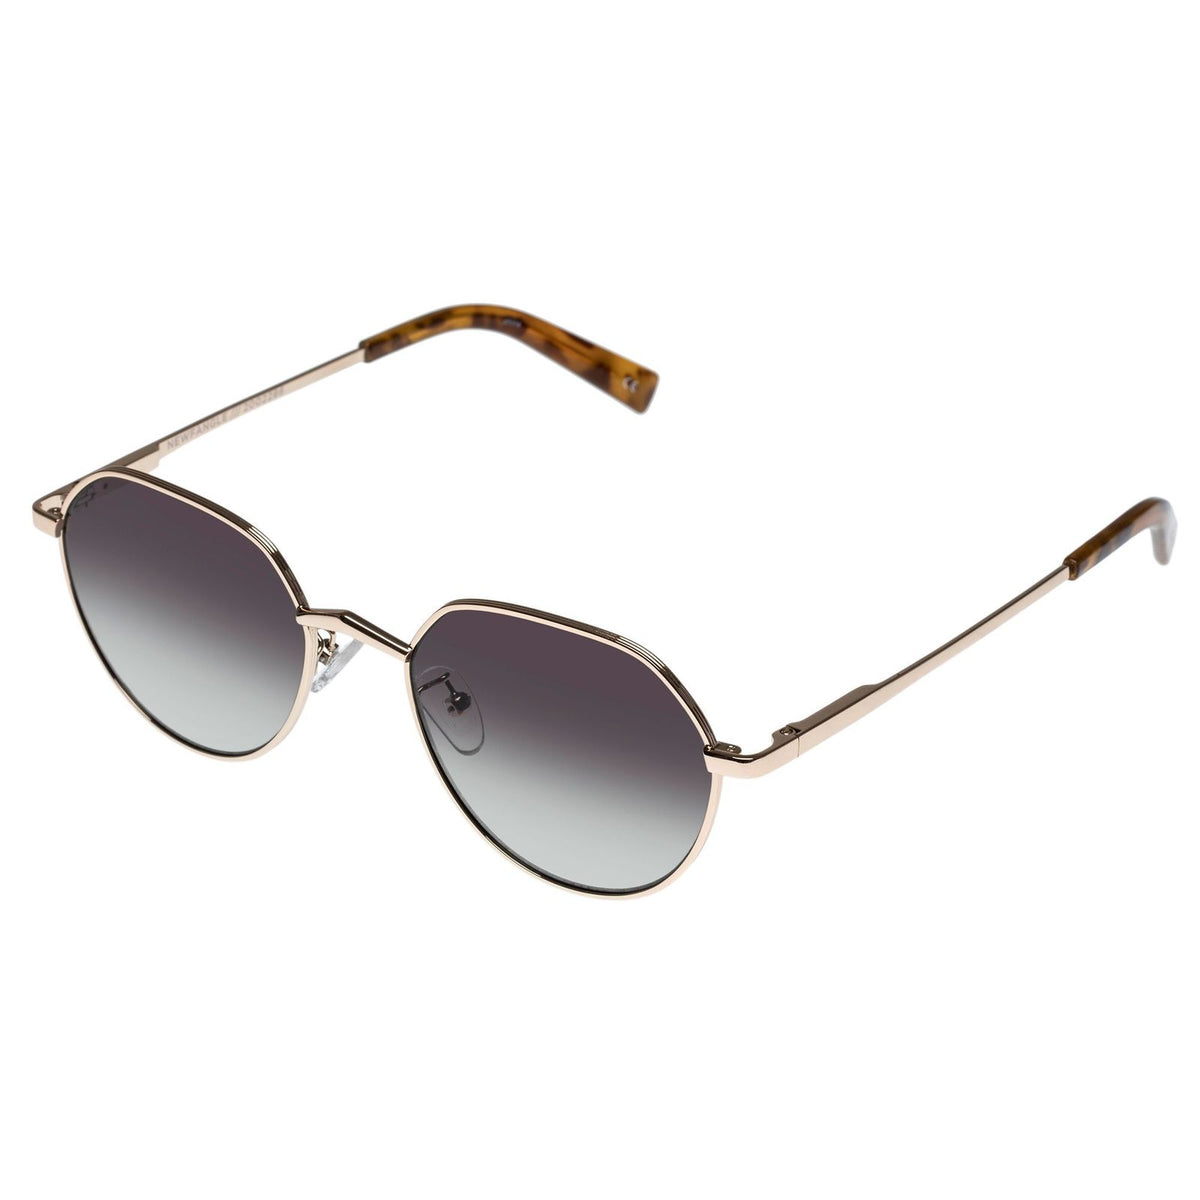 Le Specs - New Fangle - Gold Sunglasses